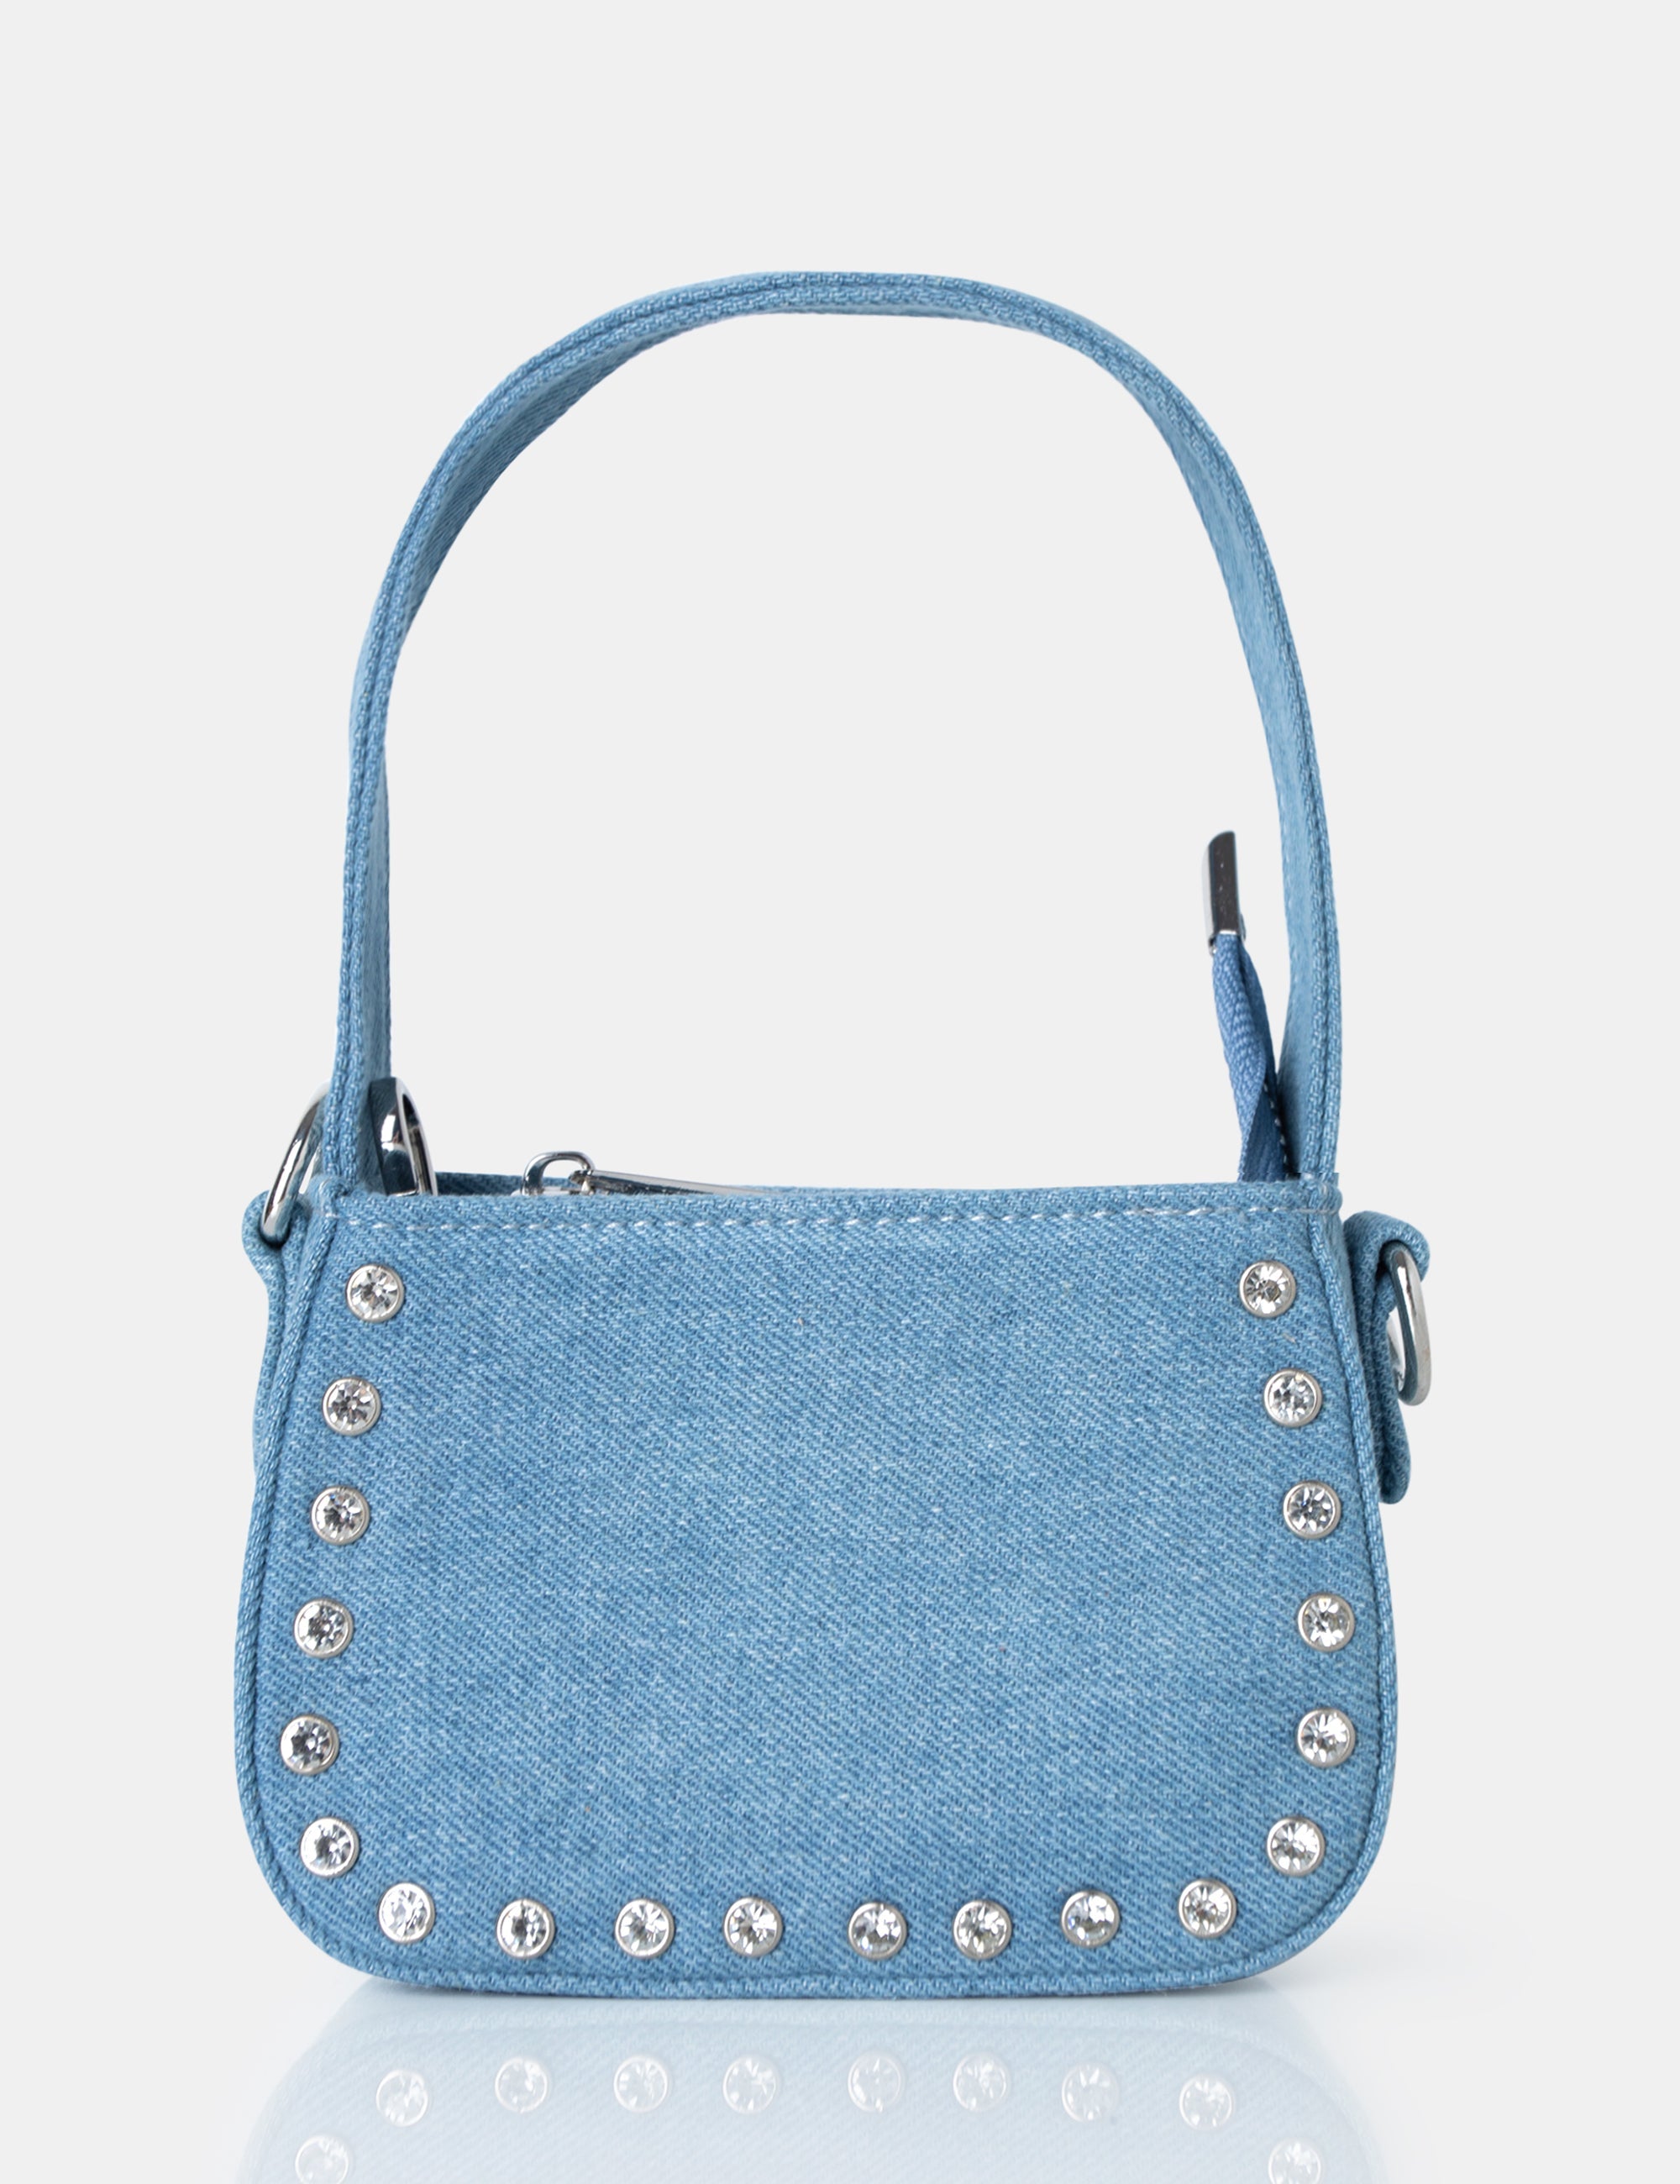 Lee Blue Denim Studded Mini Bag product